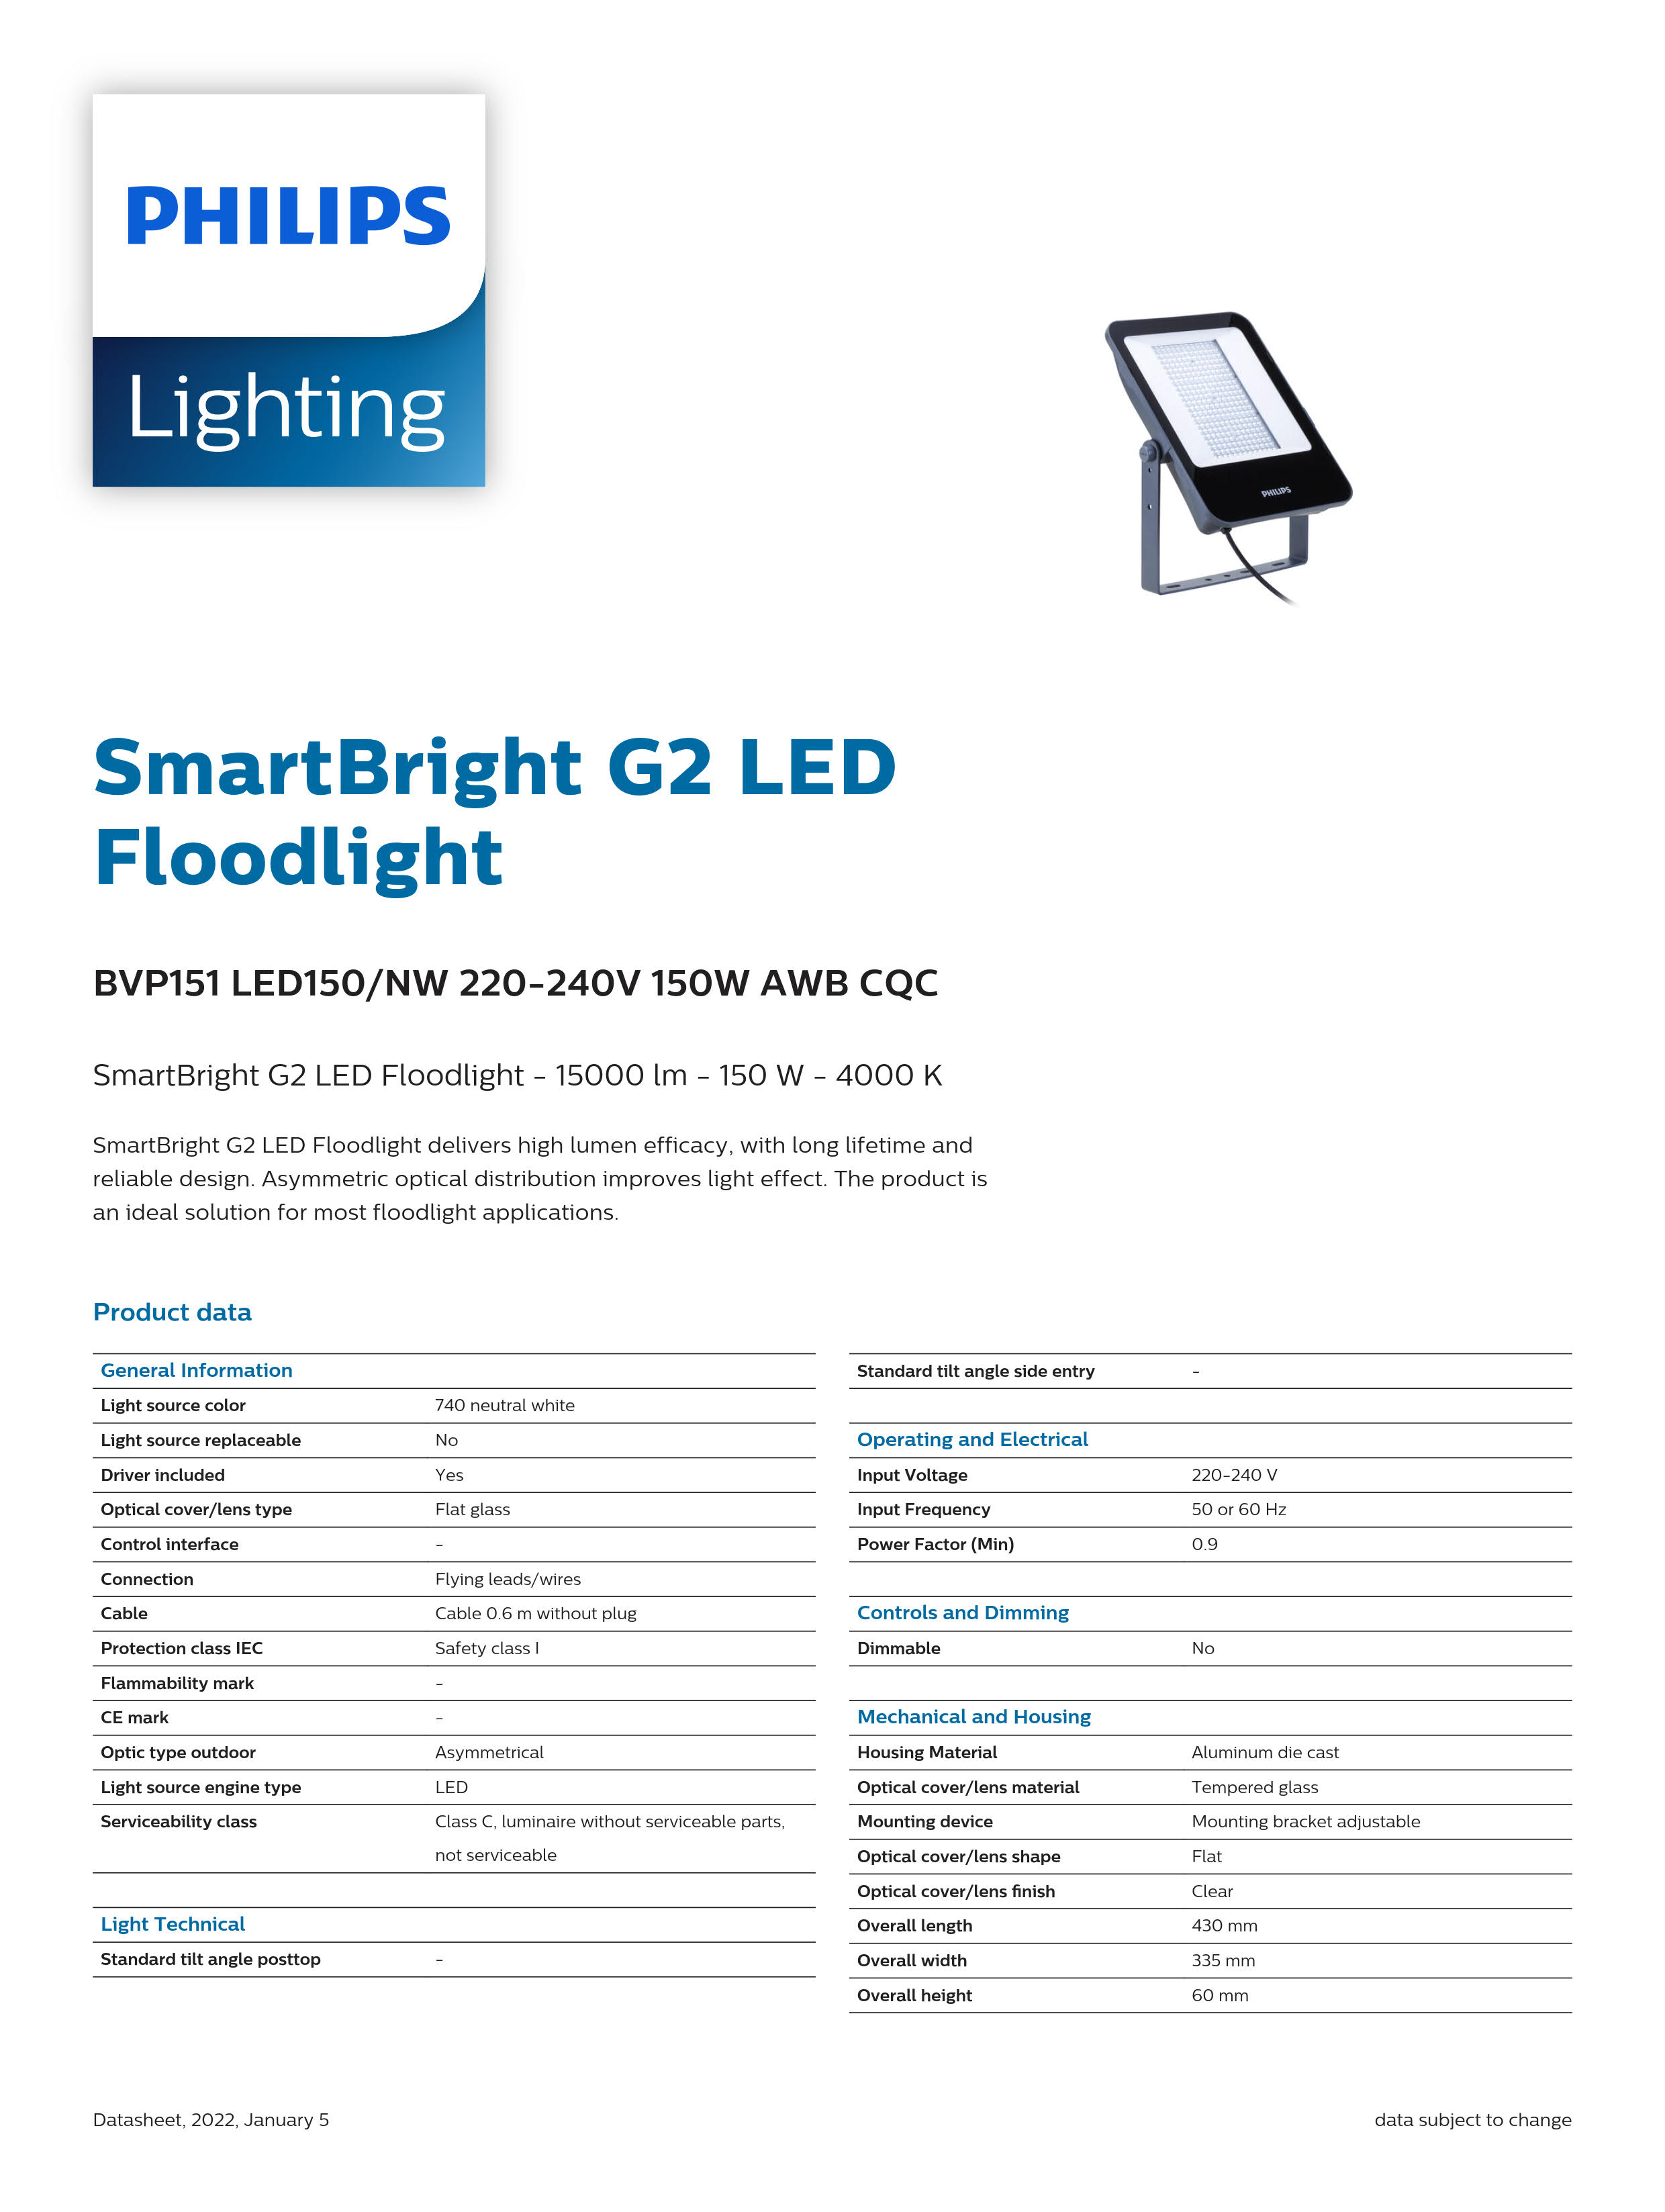 PHILIPS LED Flood light BVP151 LED150/NW 220-240V 150W AWB cQC 911401814580